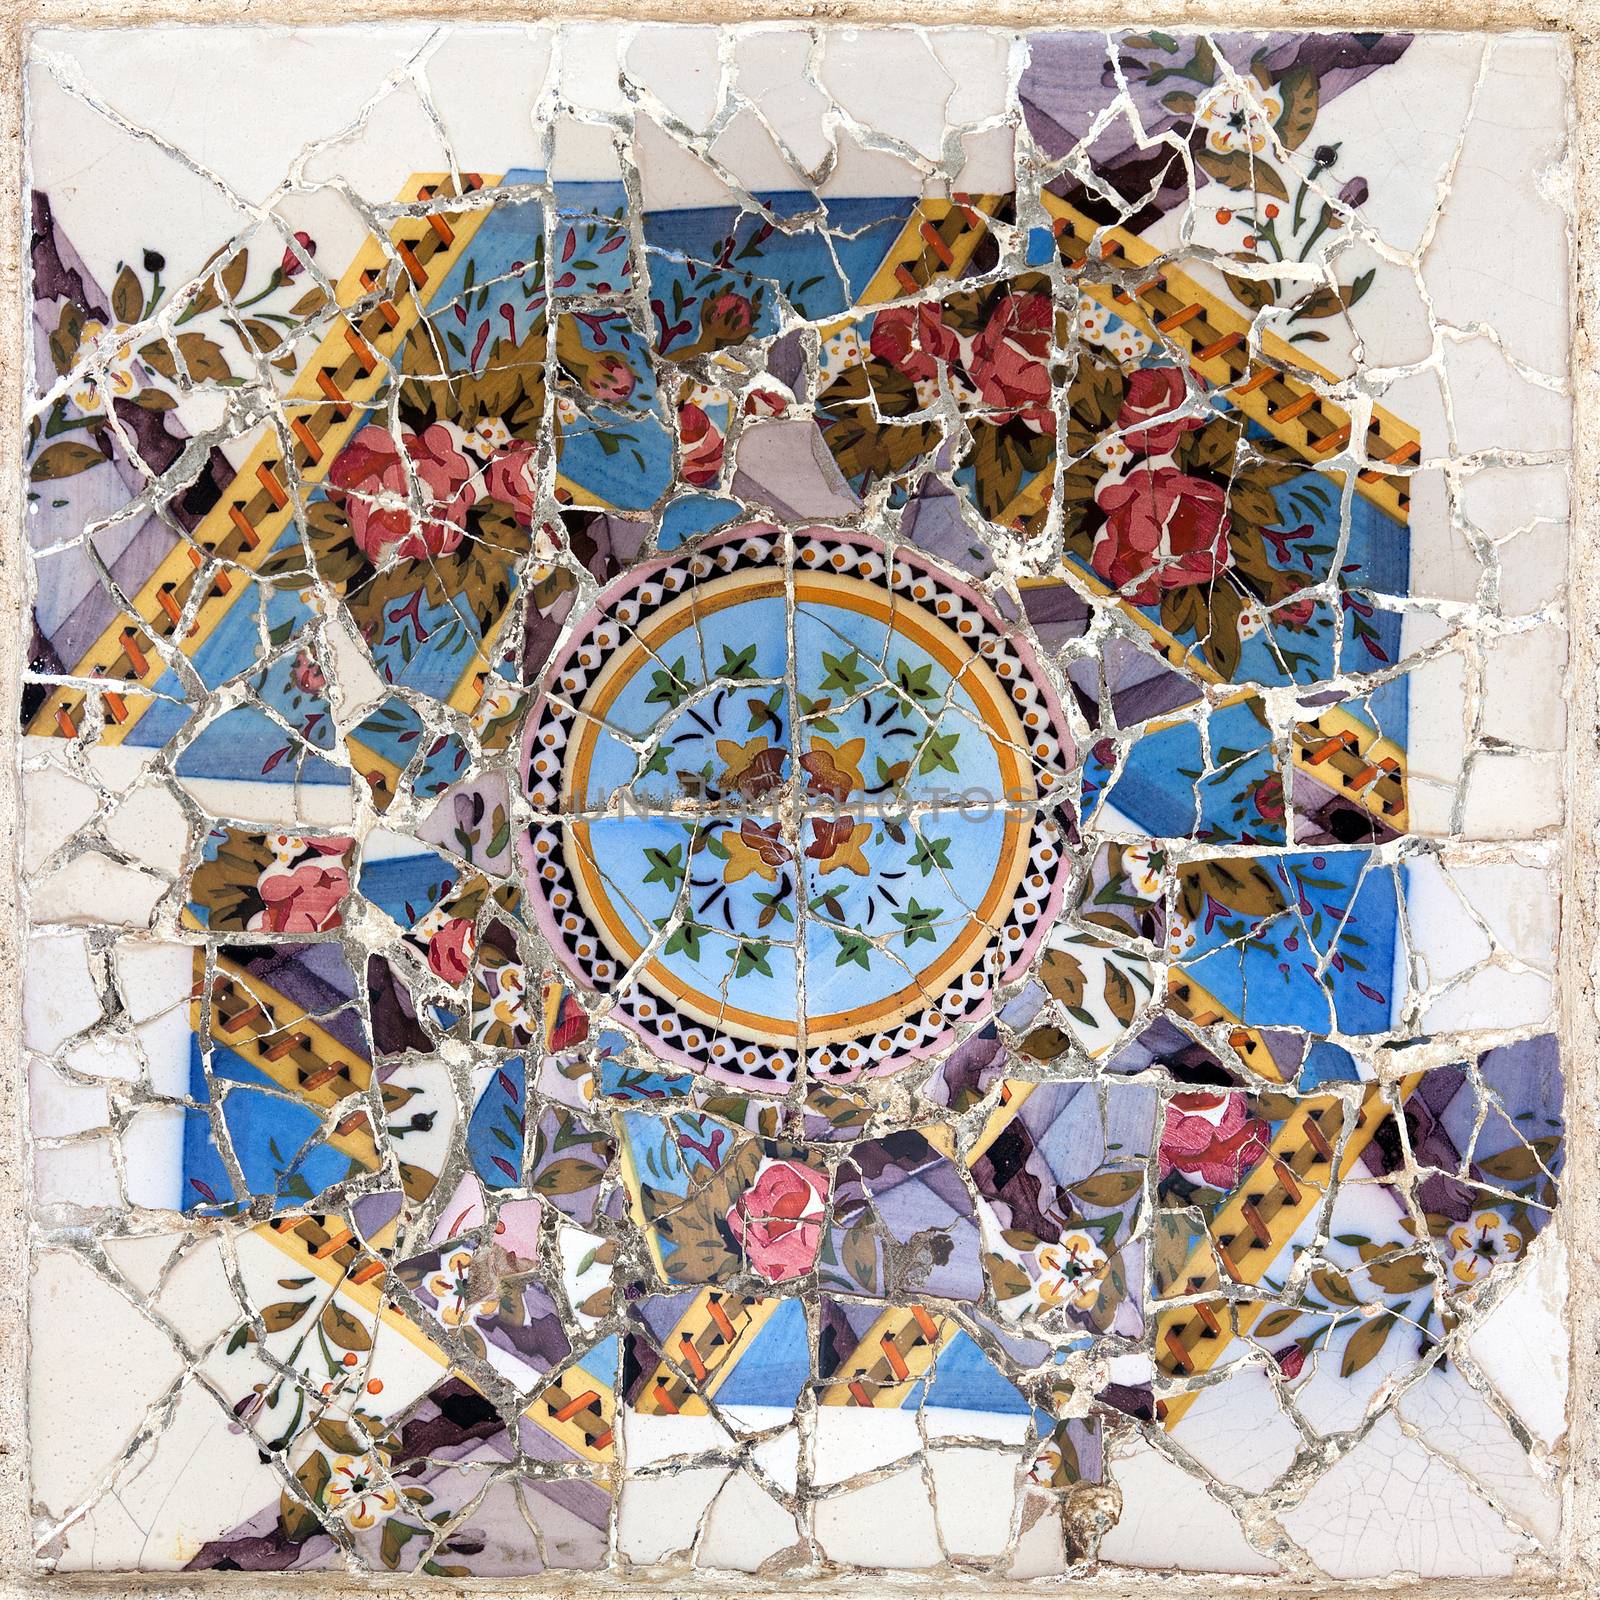 BARCELONA, SPAIN - APRIL 16: Colorful mosaic in famous Parc Guell on April 16, 2012 in Barcelona, Spain. It is part of the UNESCO World Heritage Site "Works of Gaudi", major Spanish landmark.